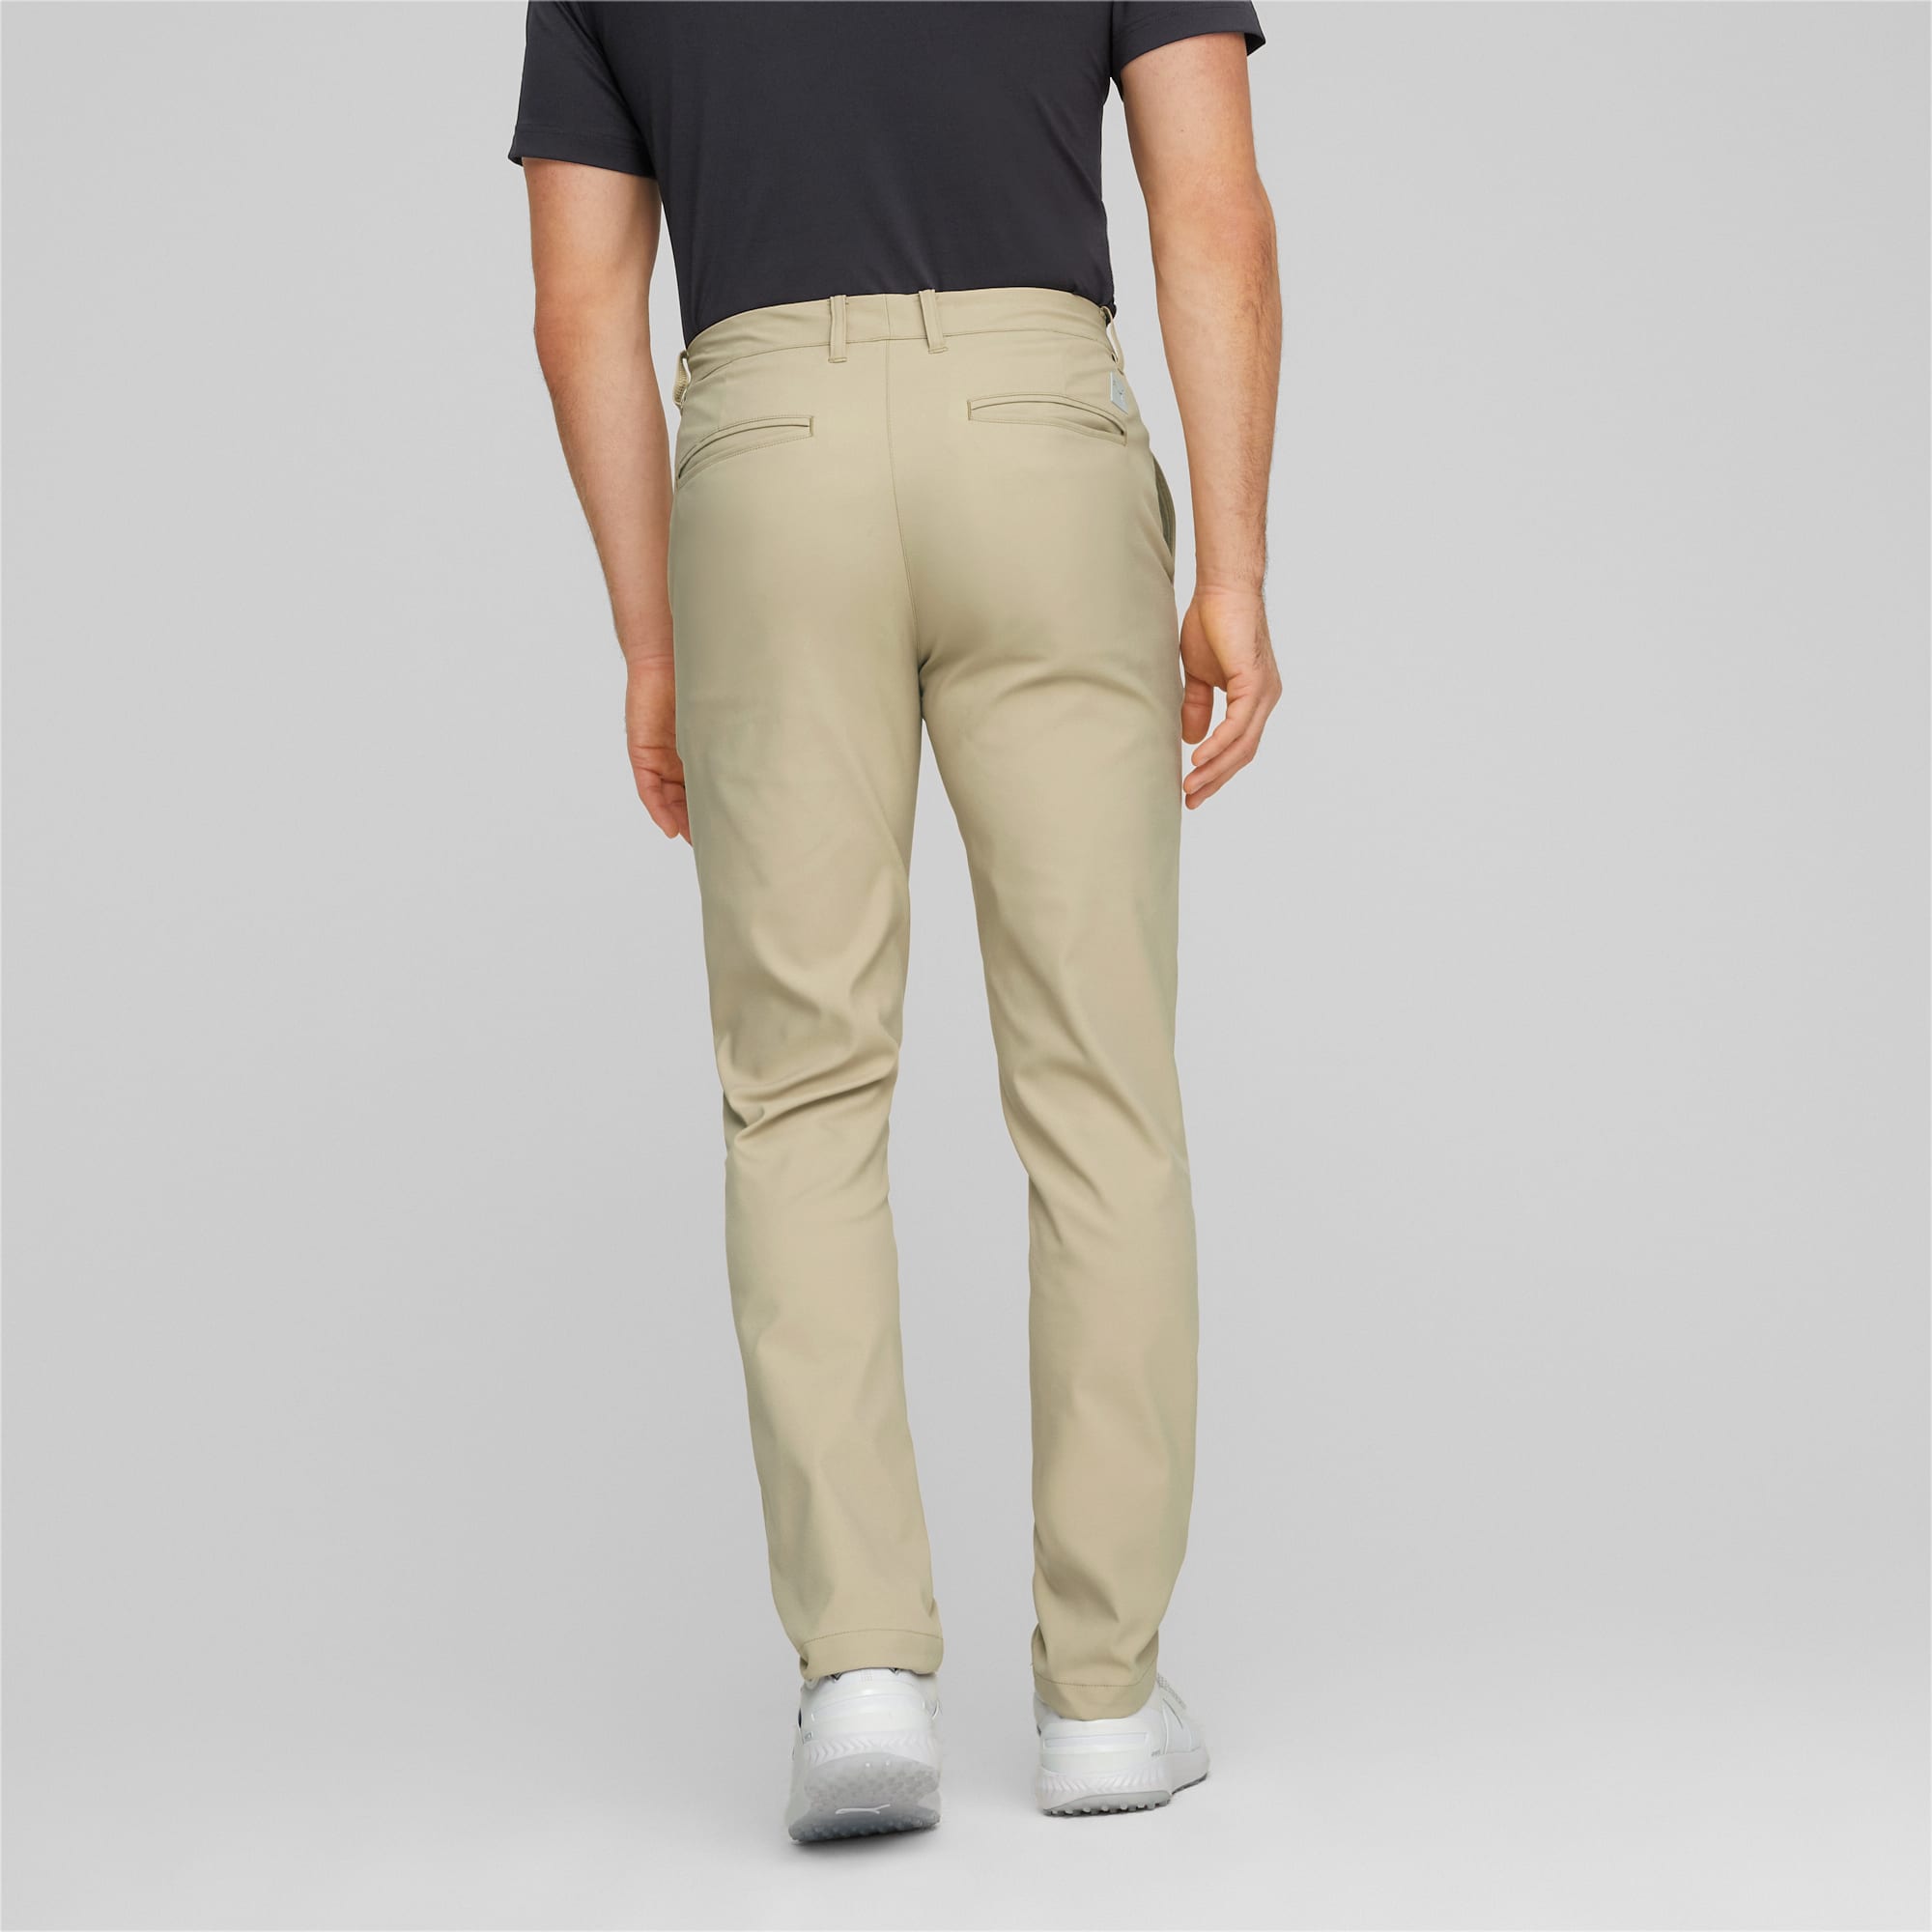 PUMA Dealer Tailored Golf Pants Men, Alabaster, Size 30/30, Clothing